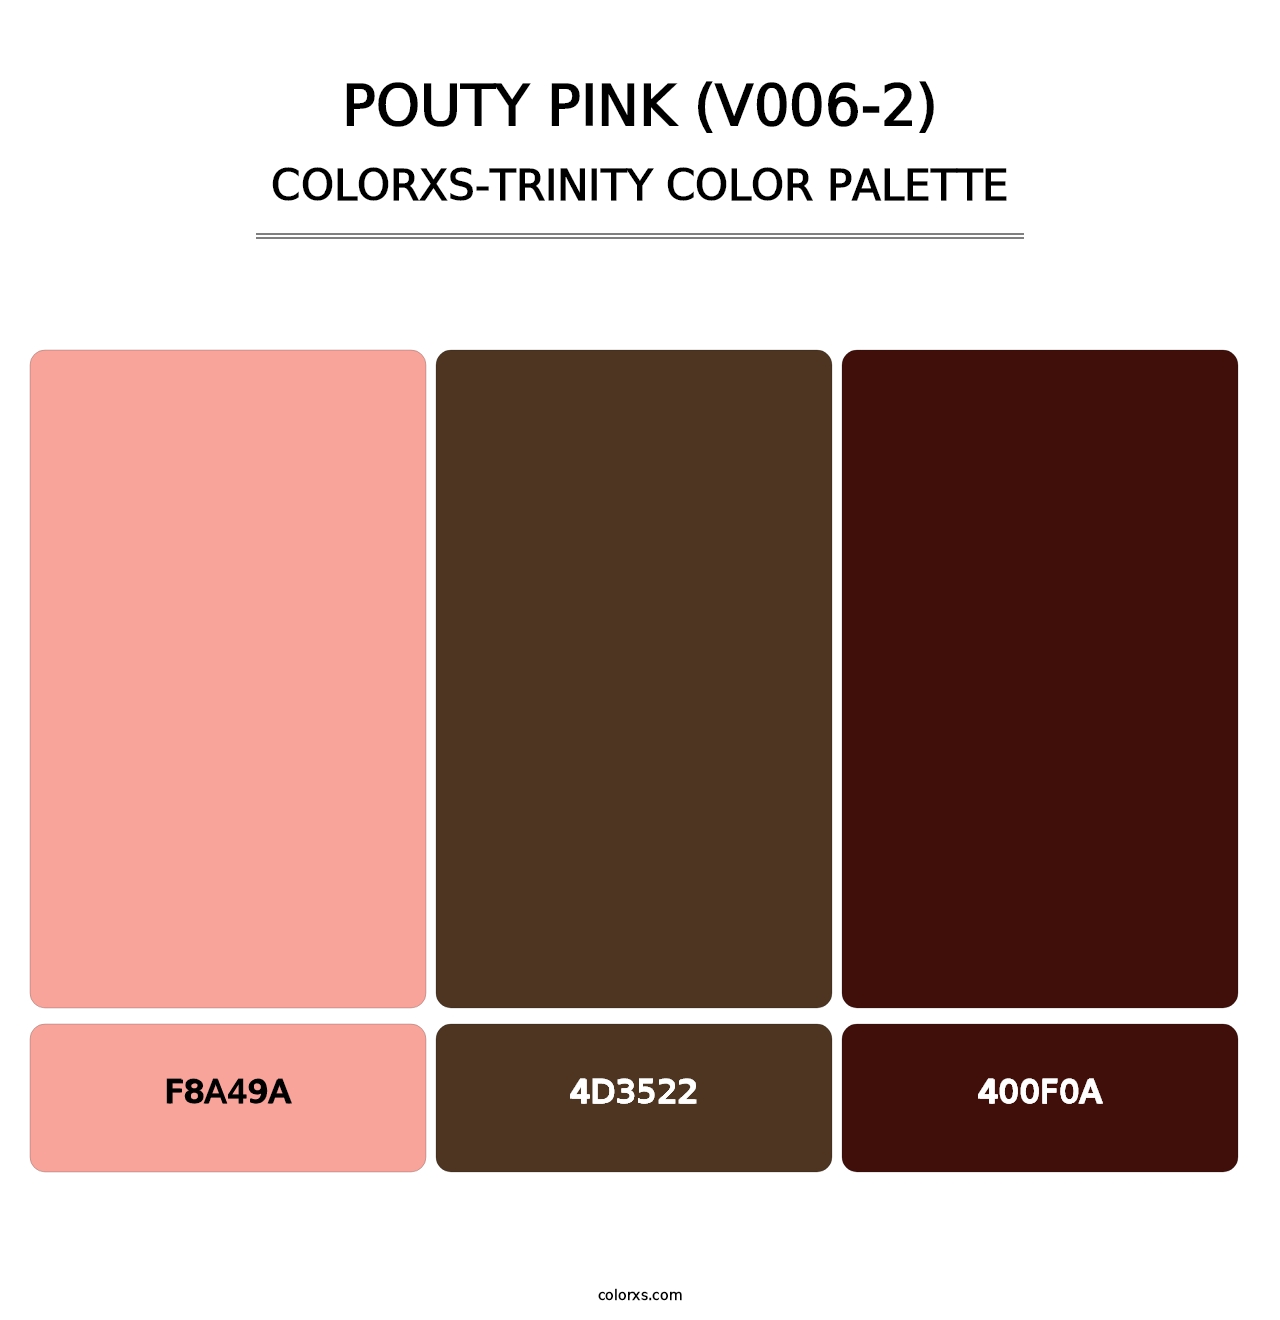 Pouty Pink (V006-2) - Colorxs Trinity Palette